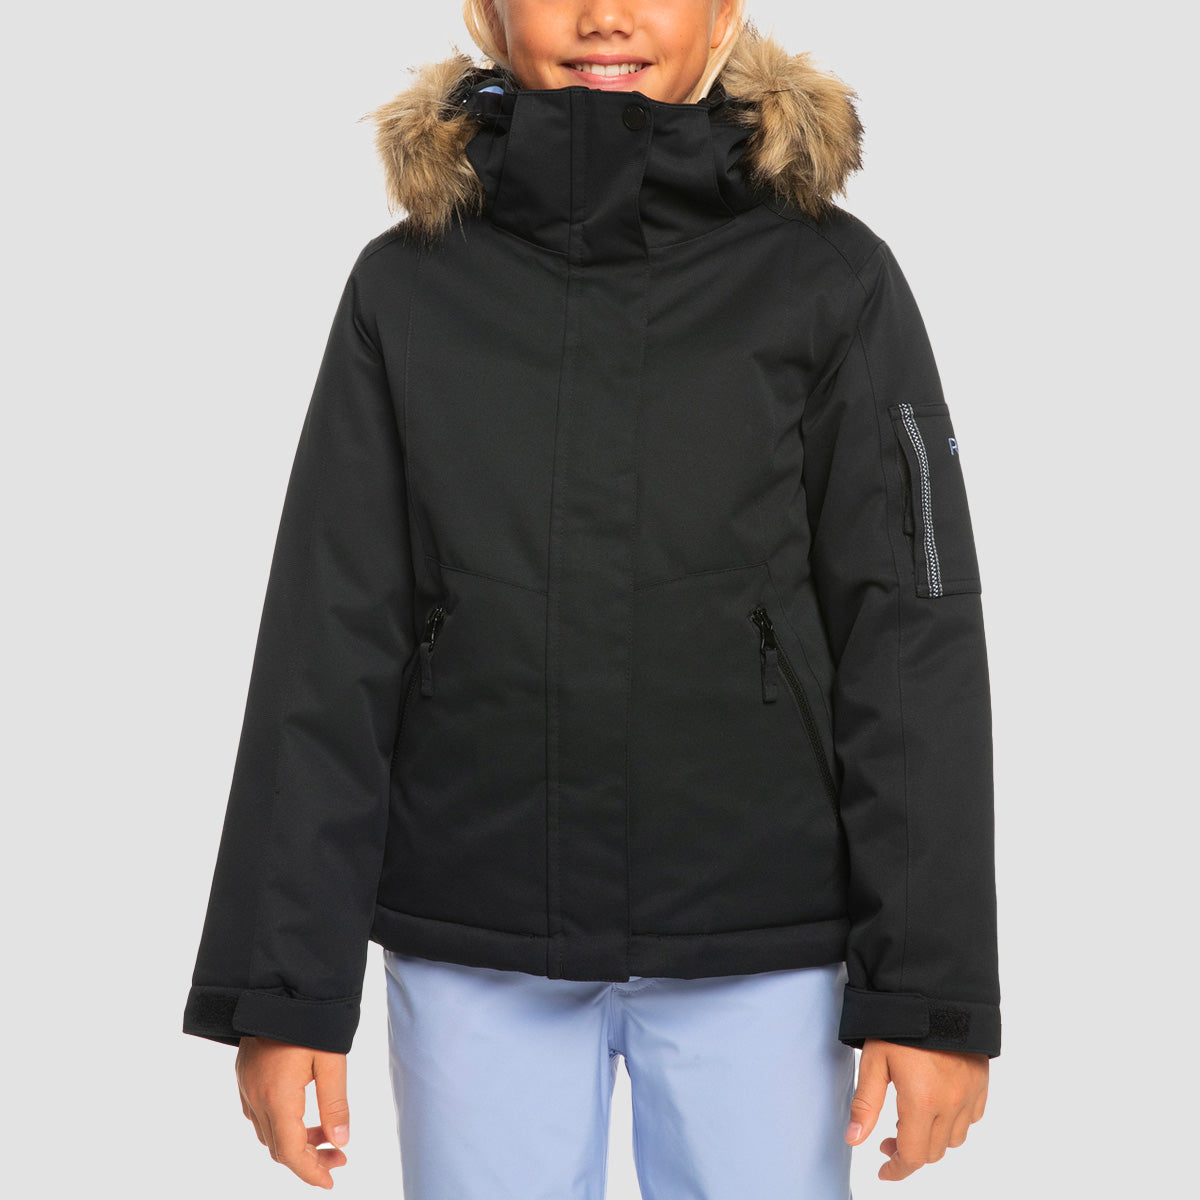 Roxy Meade Insulated Snow Jacket True Black - Girls